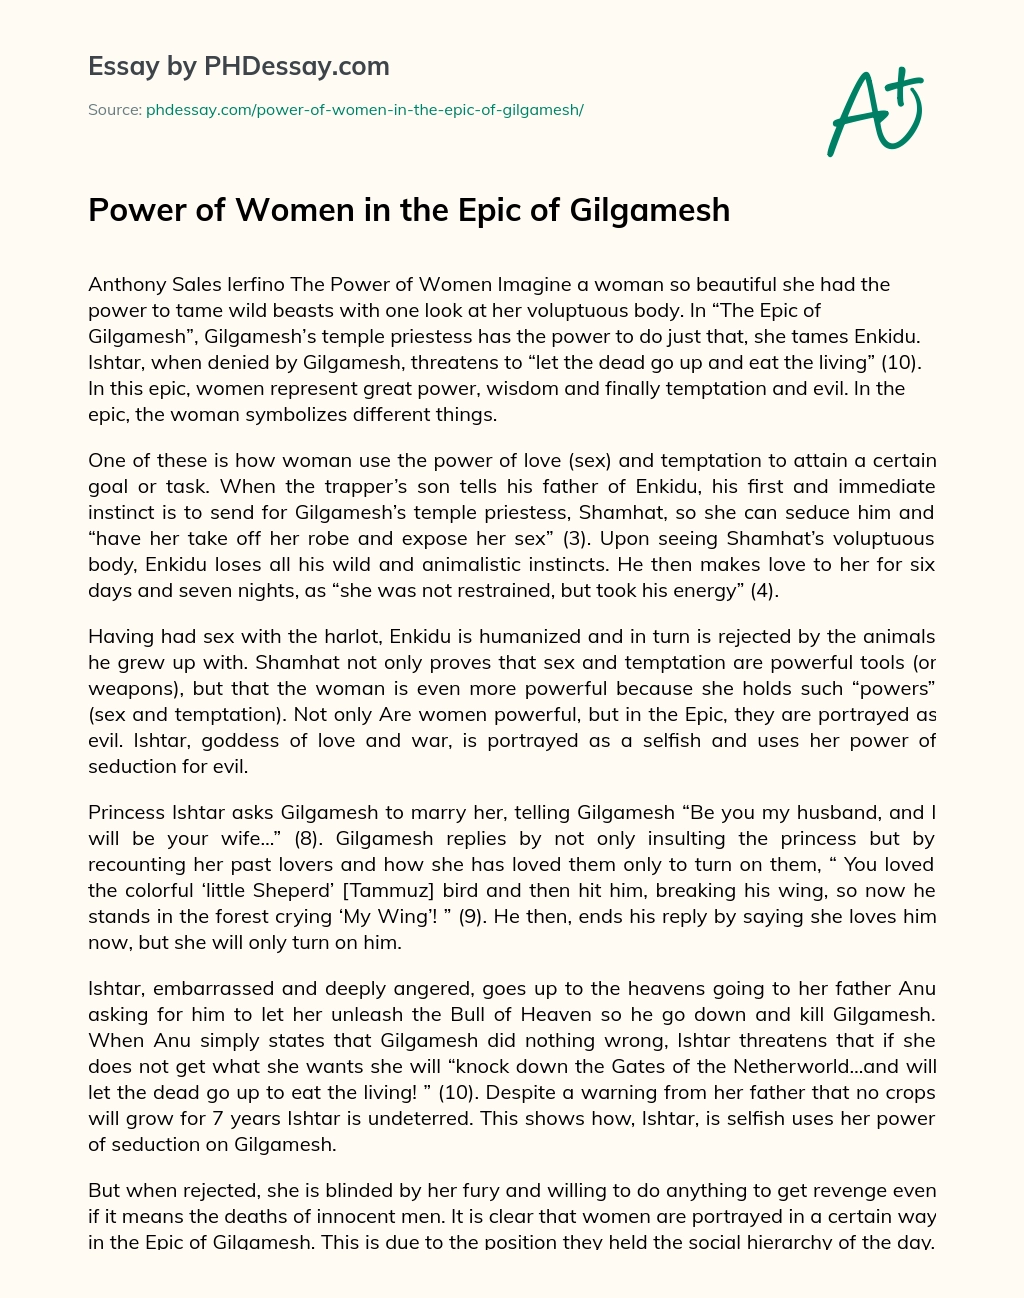 Power of Women in the Epic of Gilgamesh essay